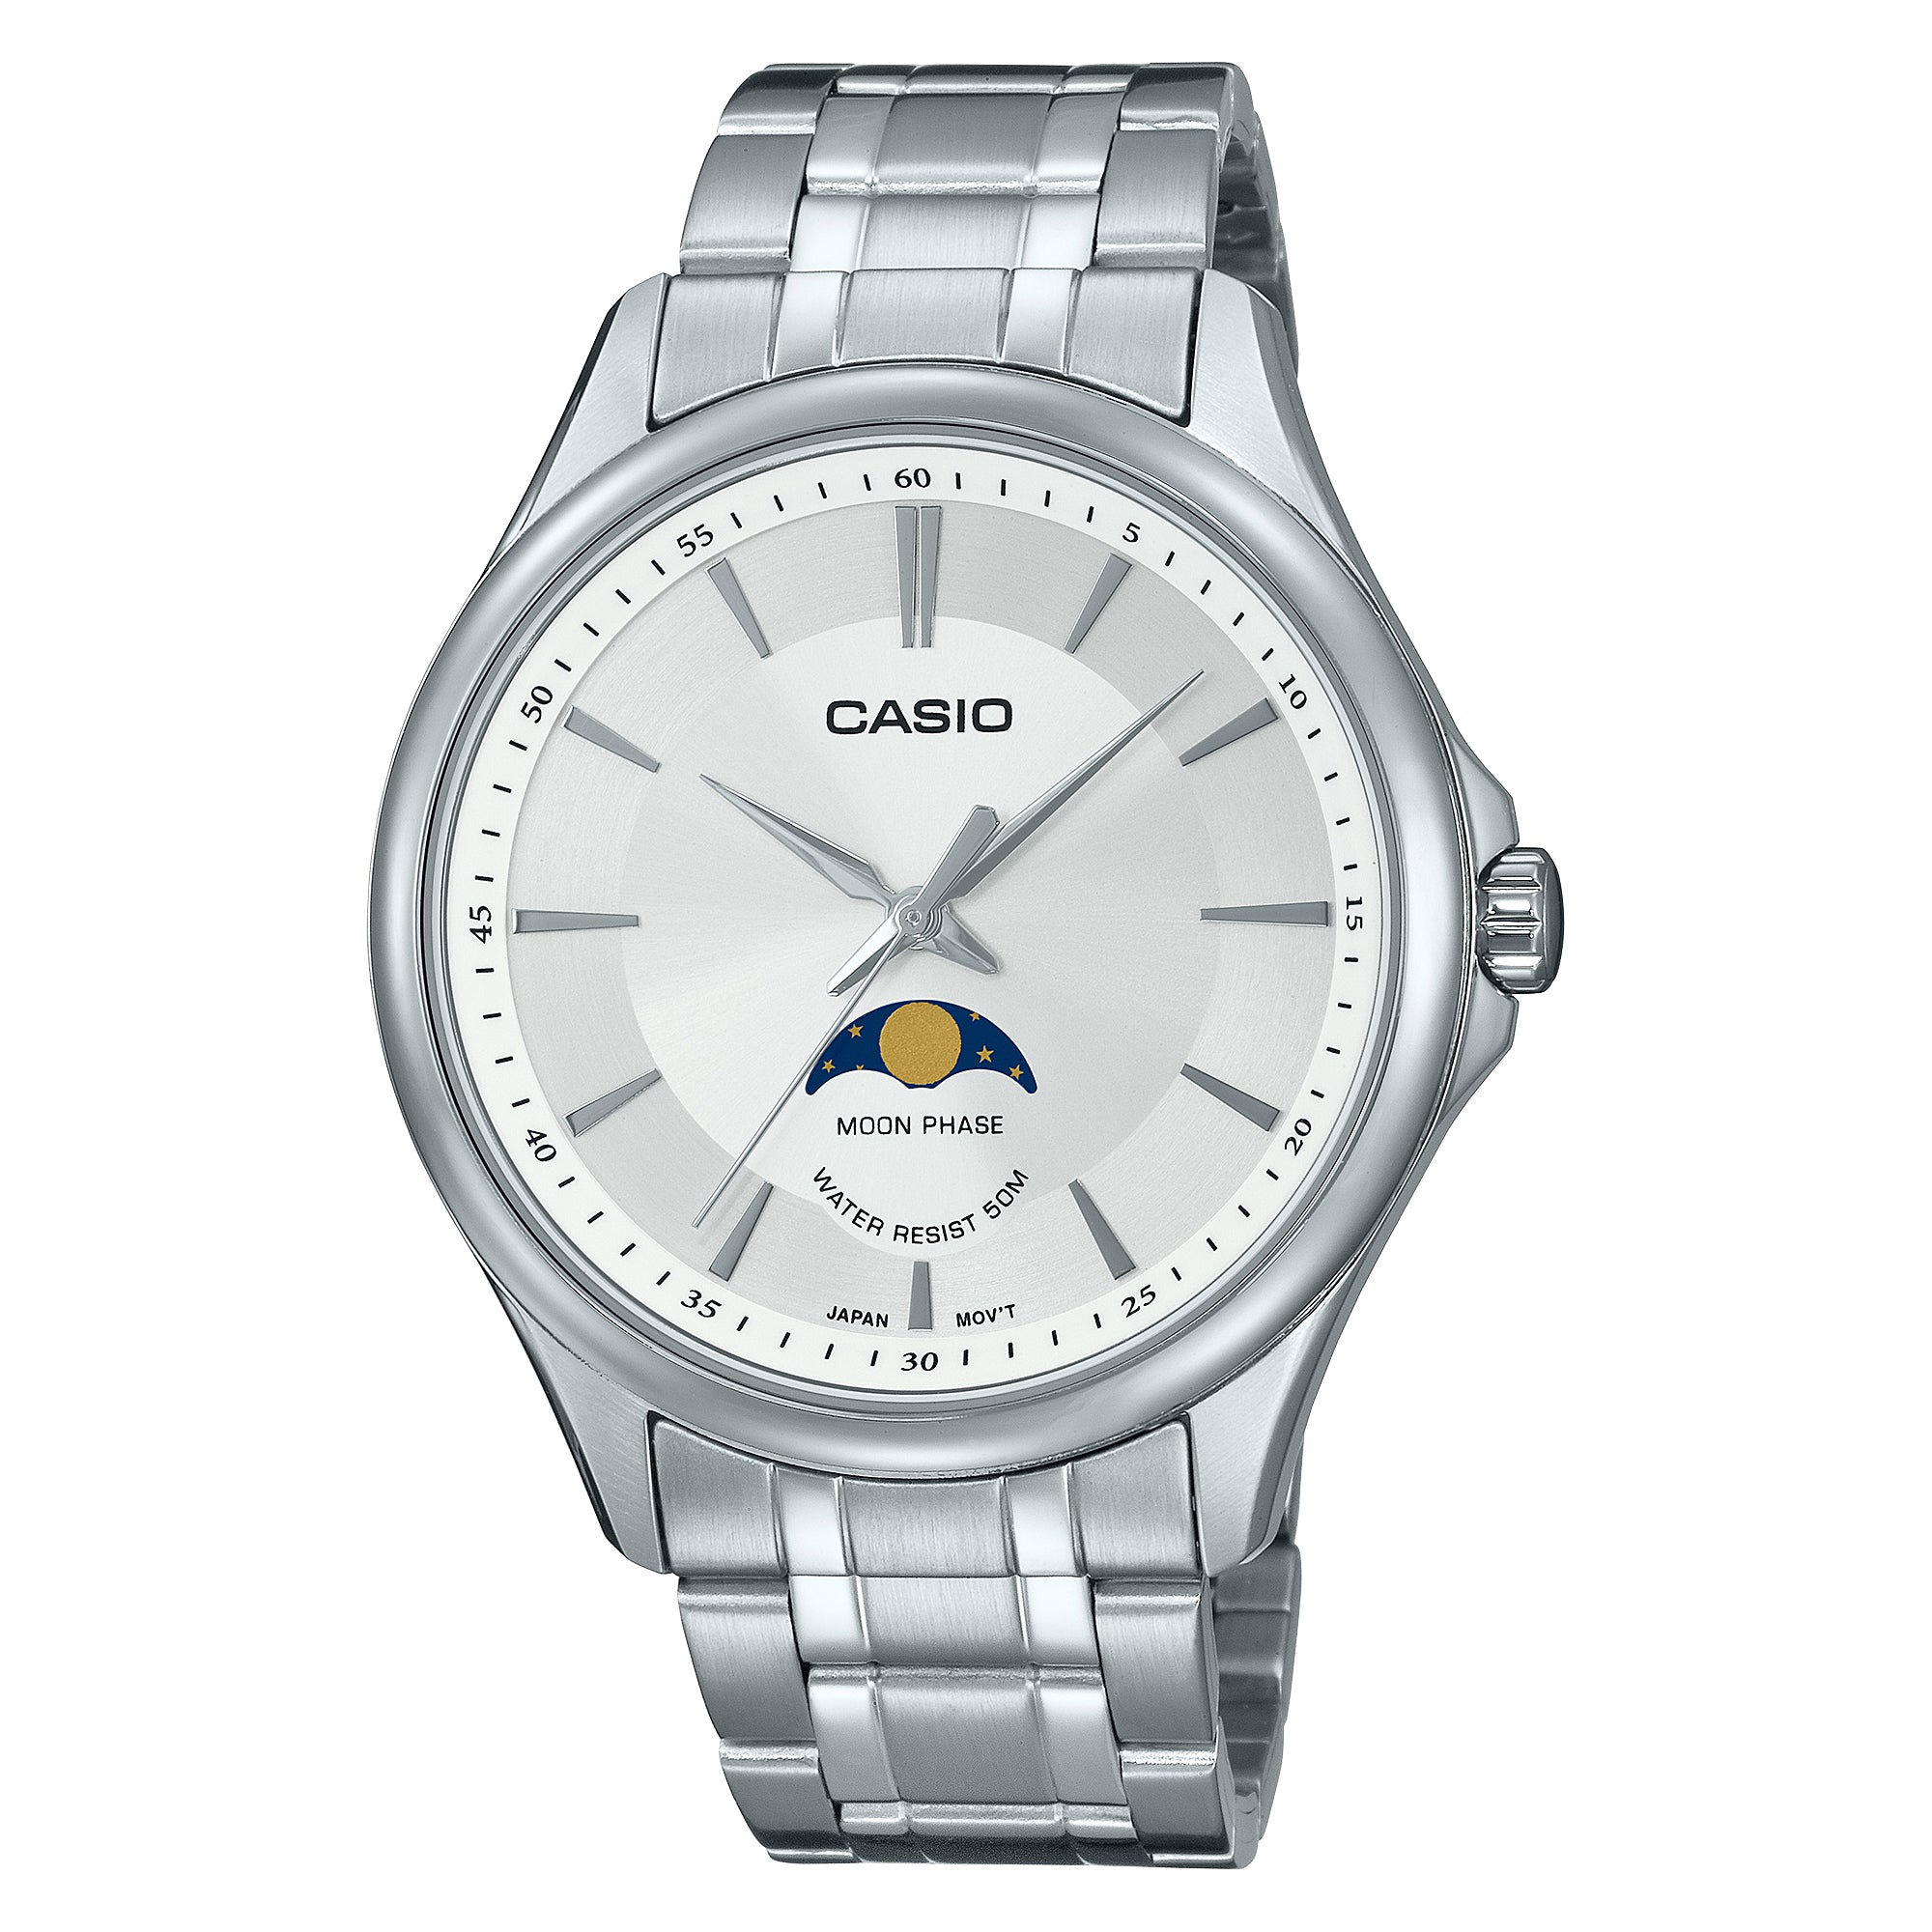 Casio Men's Analog Watch MTPM100D-7A MTP-M100D-7A